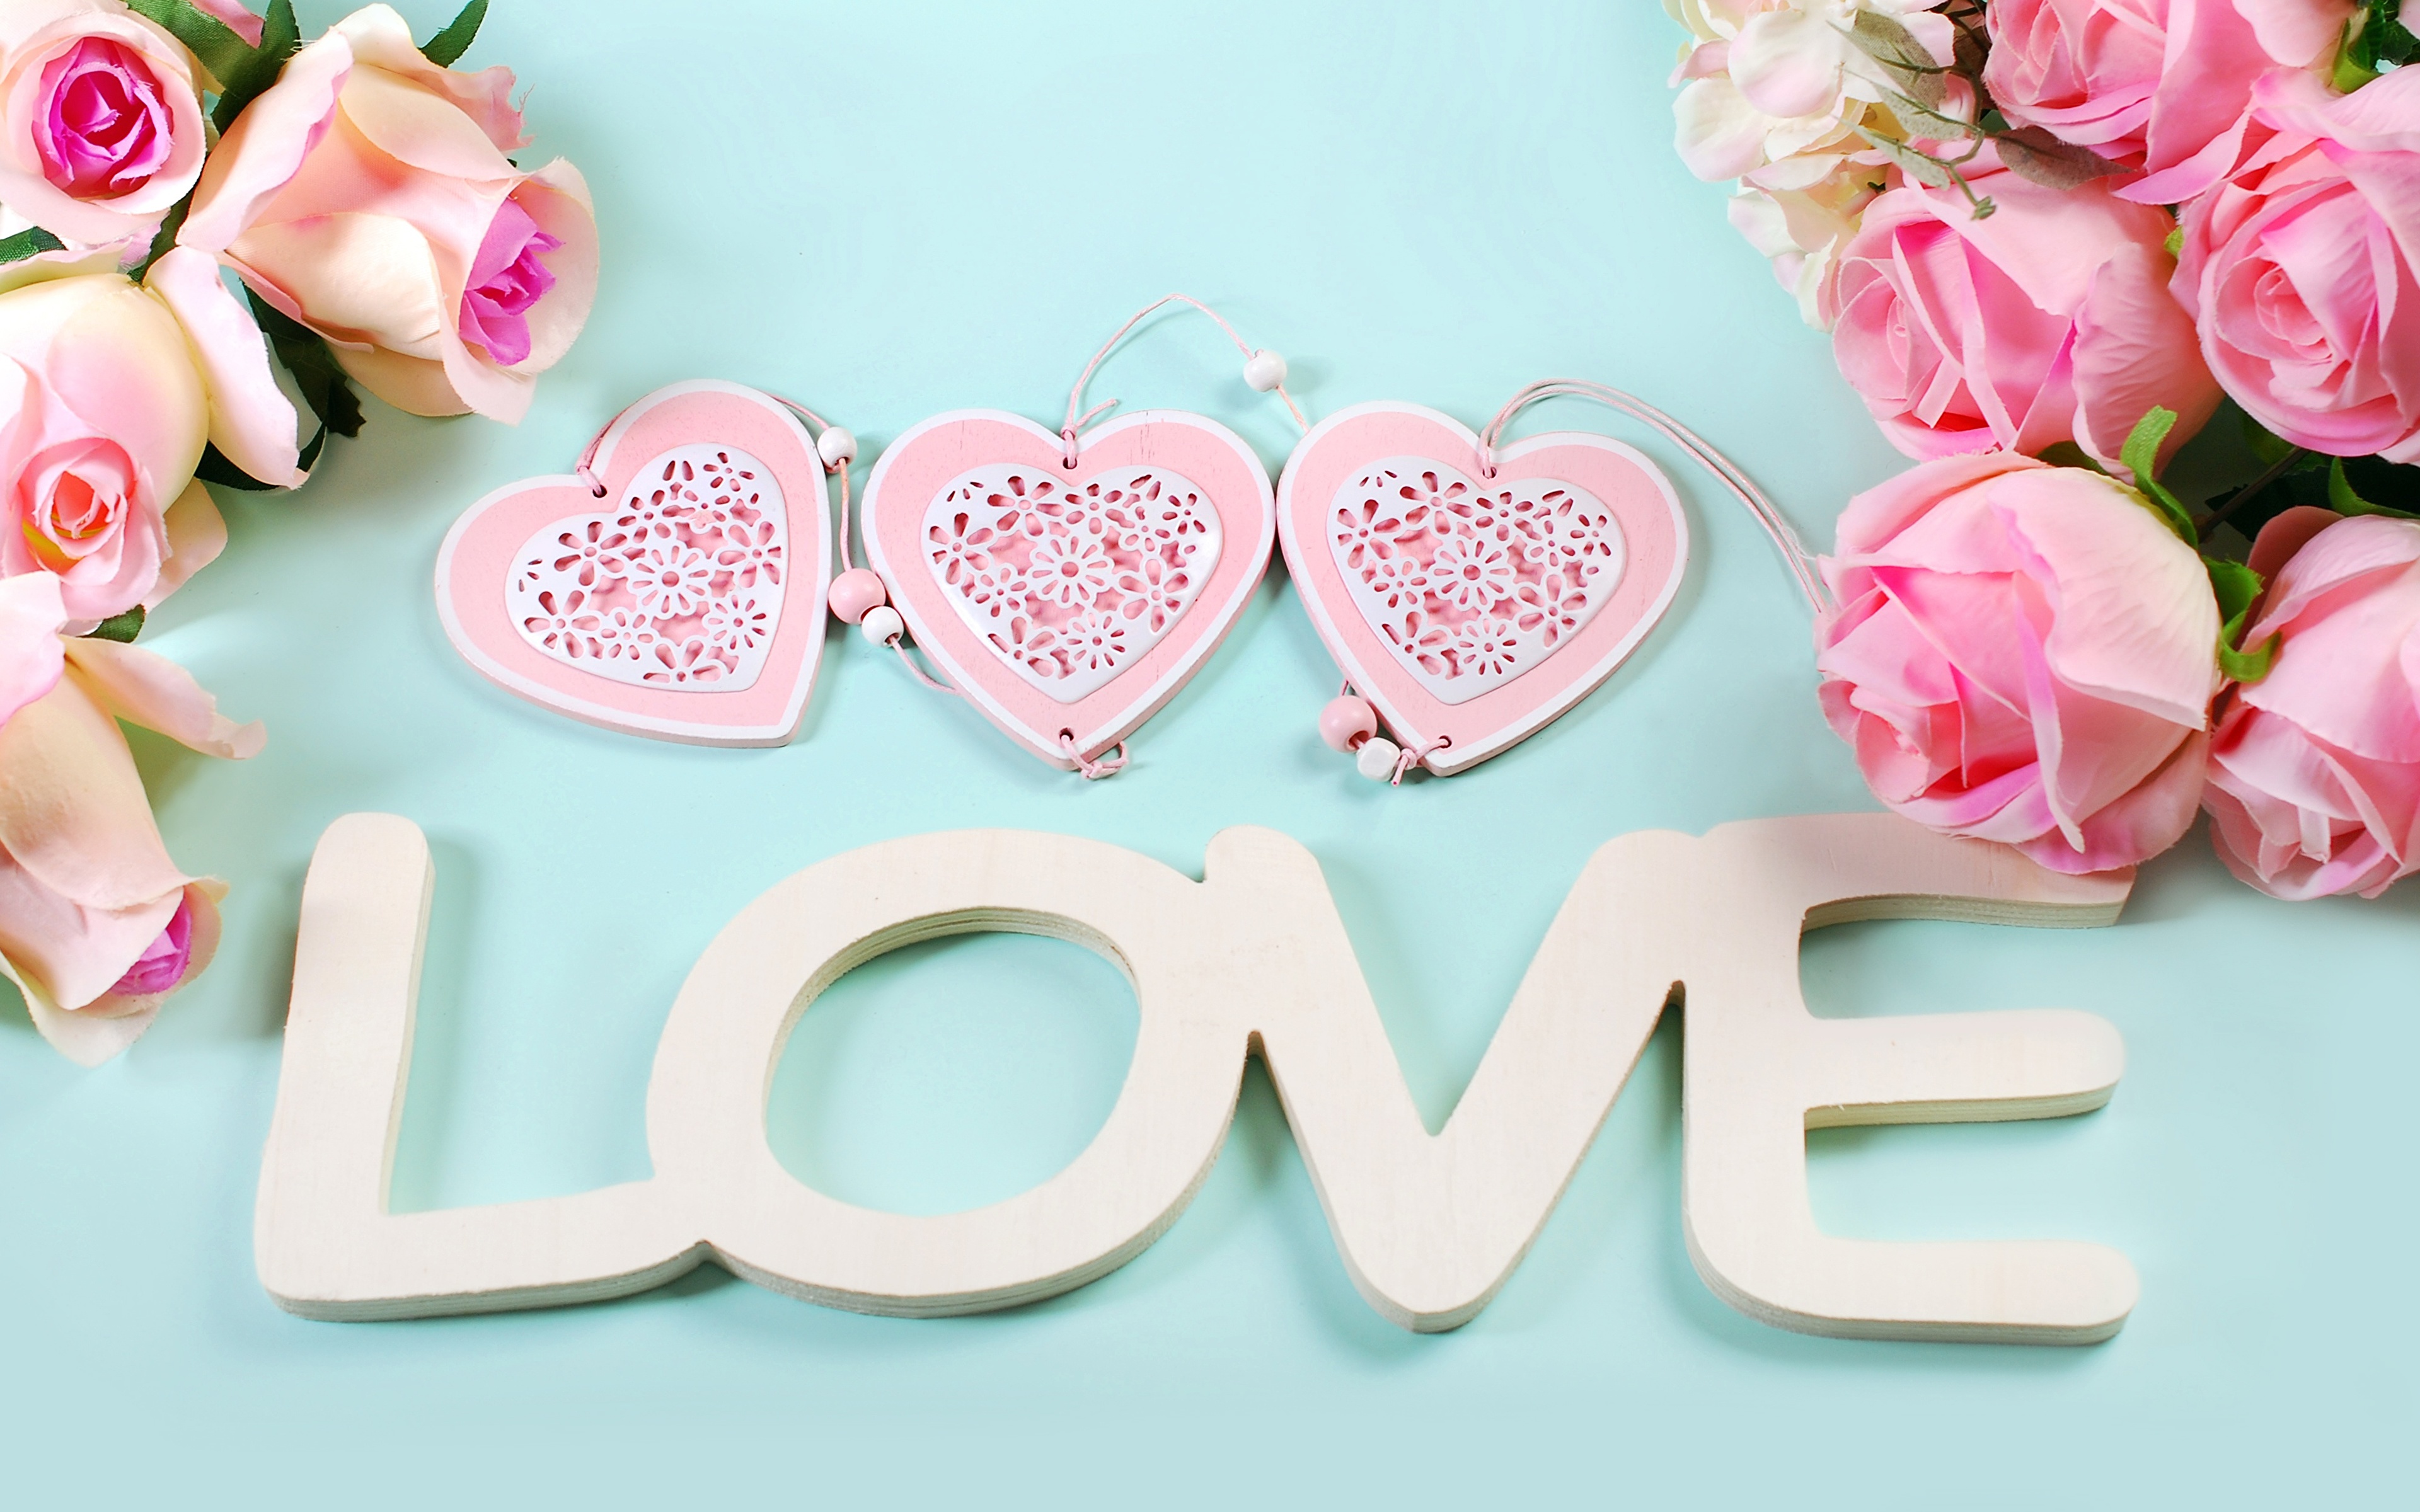 Romantic Love Hearts And Roses - HD Wallpaper 